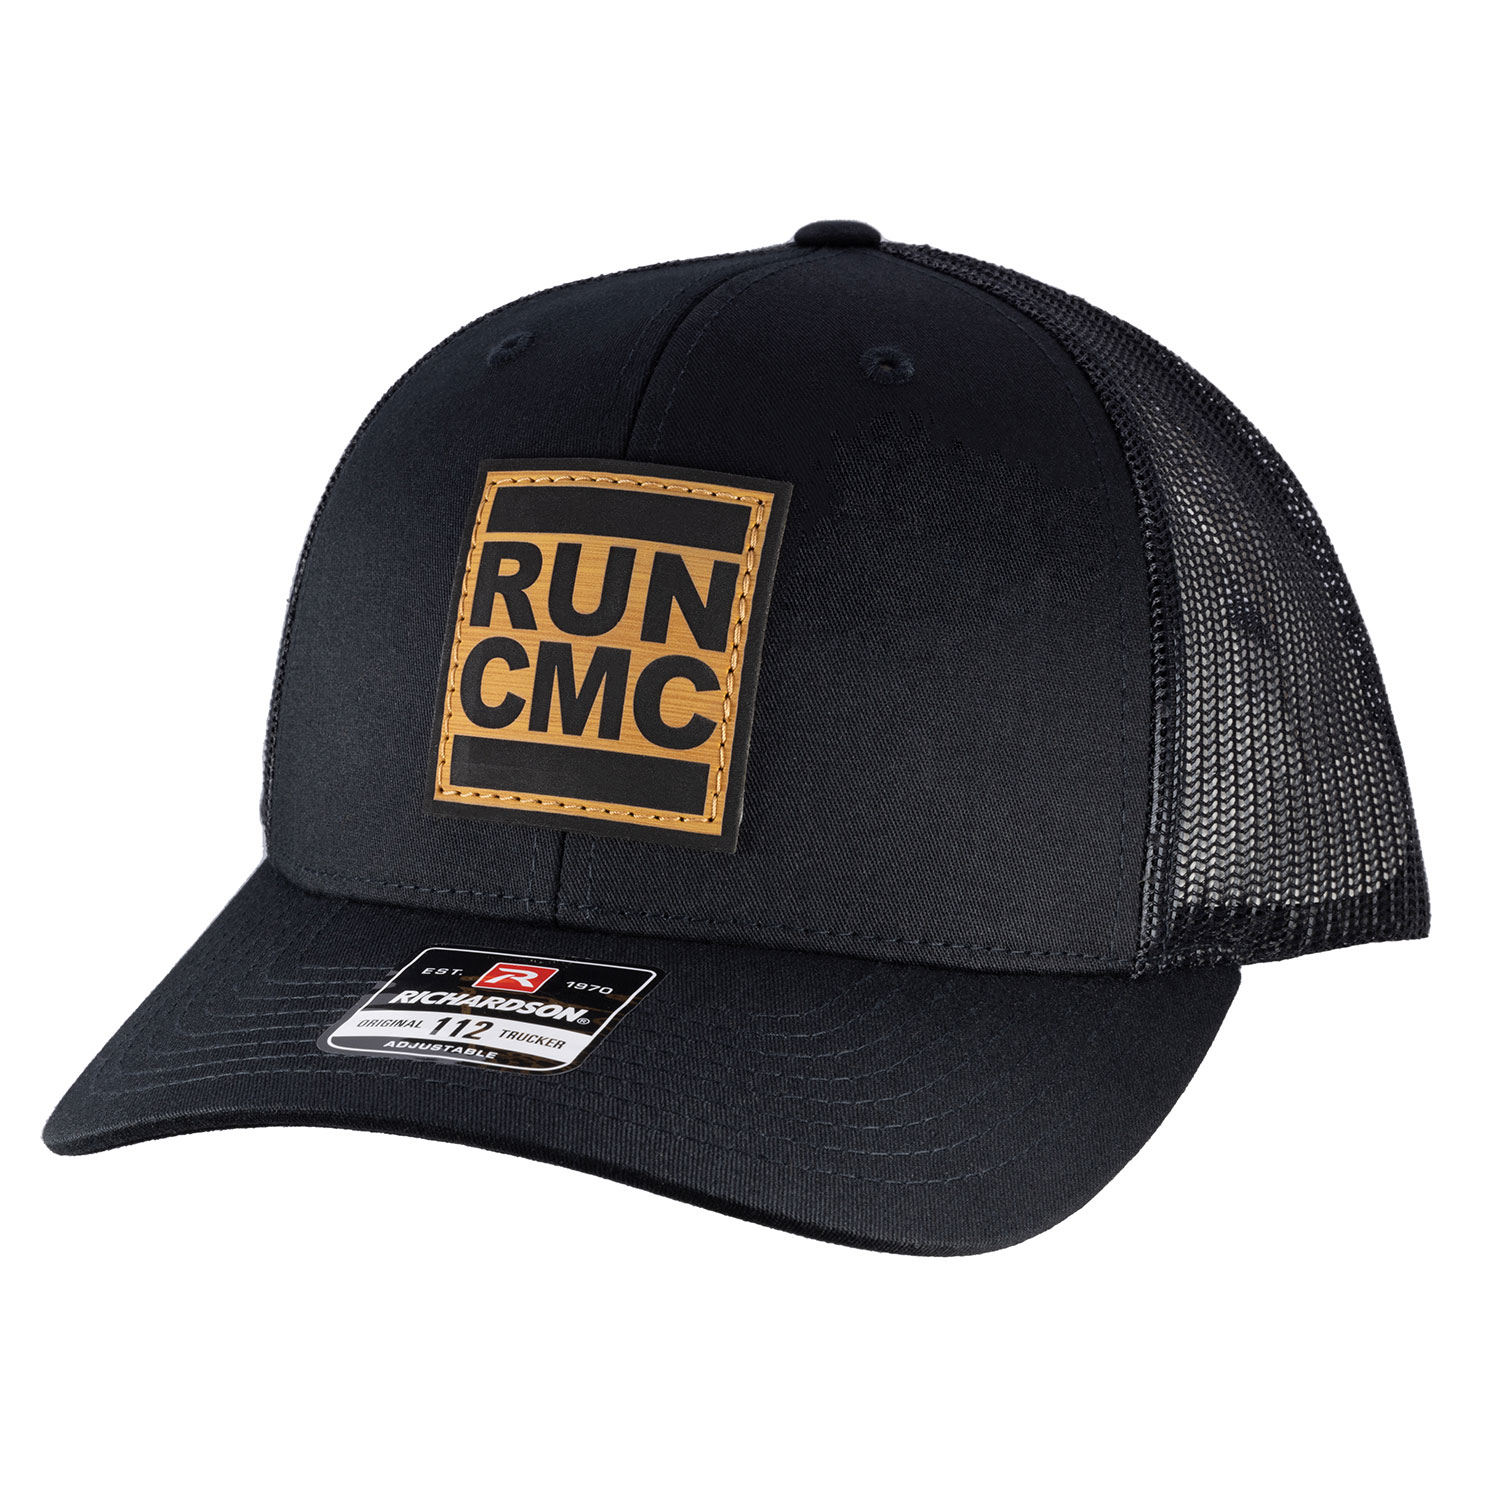 RUN CMC Leather Hat - Triggers